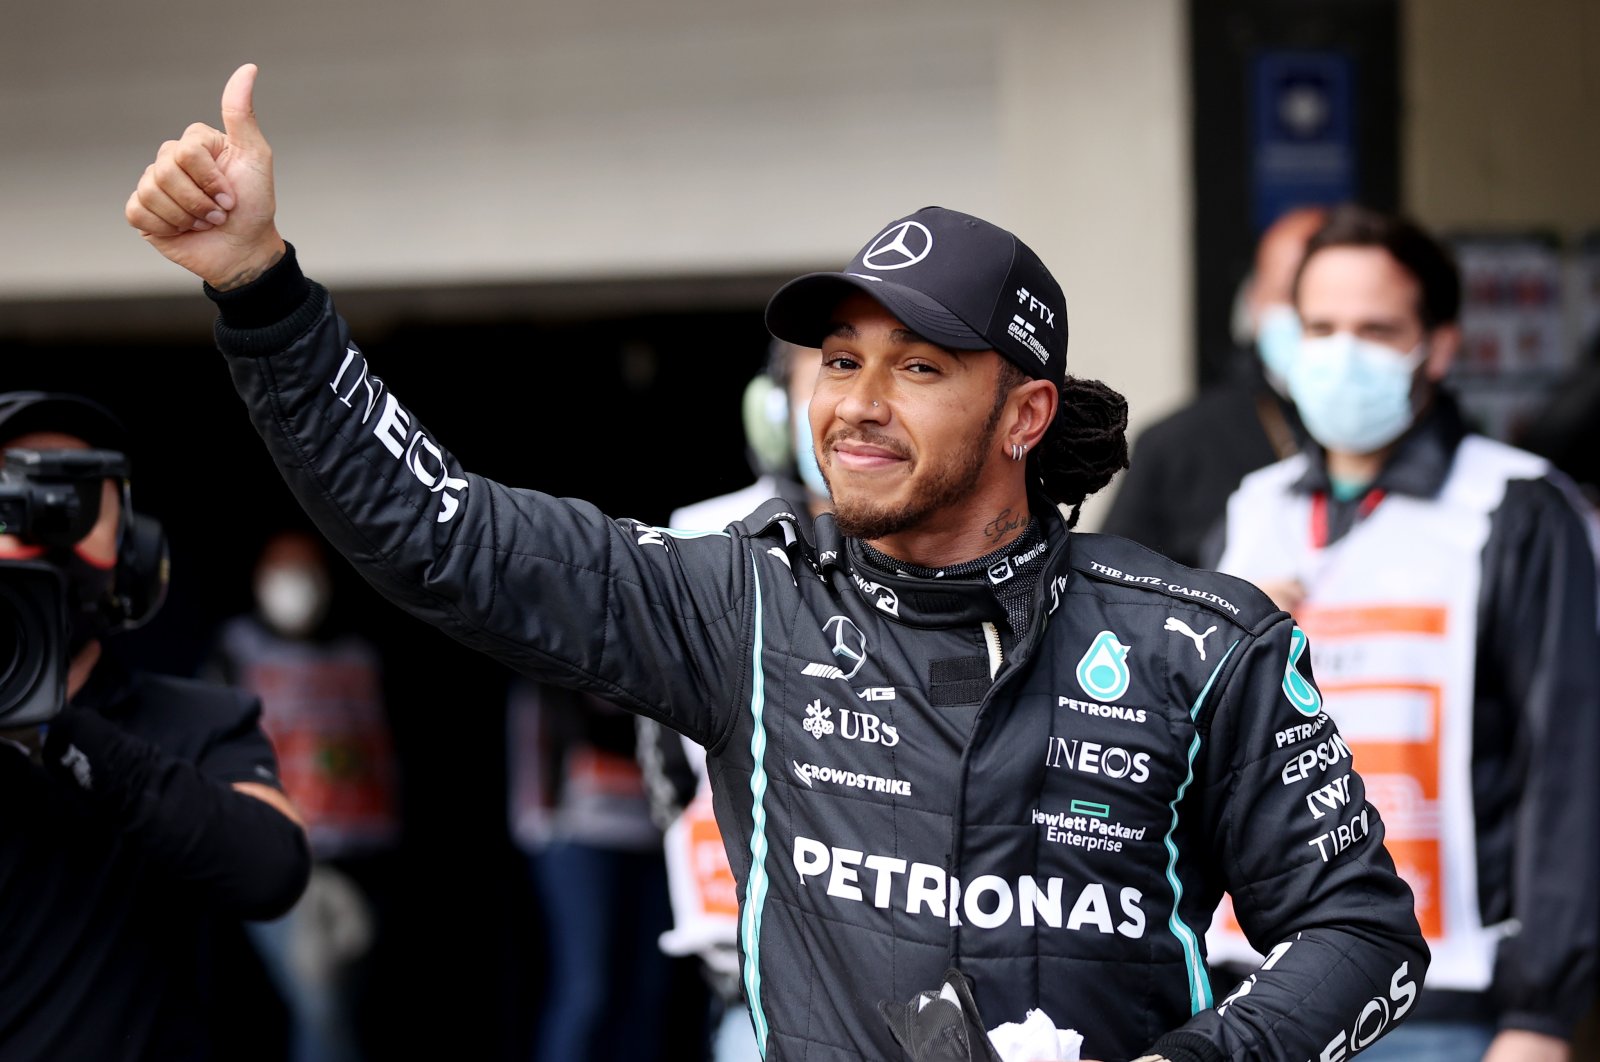 Mercedes' Lewis Hamilton celebrates after finishing first in Brazilian Grand Prix, Jose Carlos Pace Circuit, Sao Paulo, Brazil, Nov. 12, 2021 (Pool via Reuters)